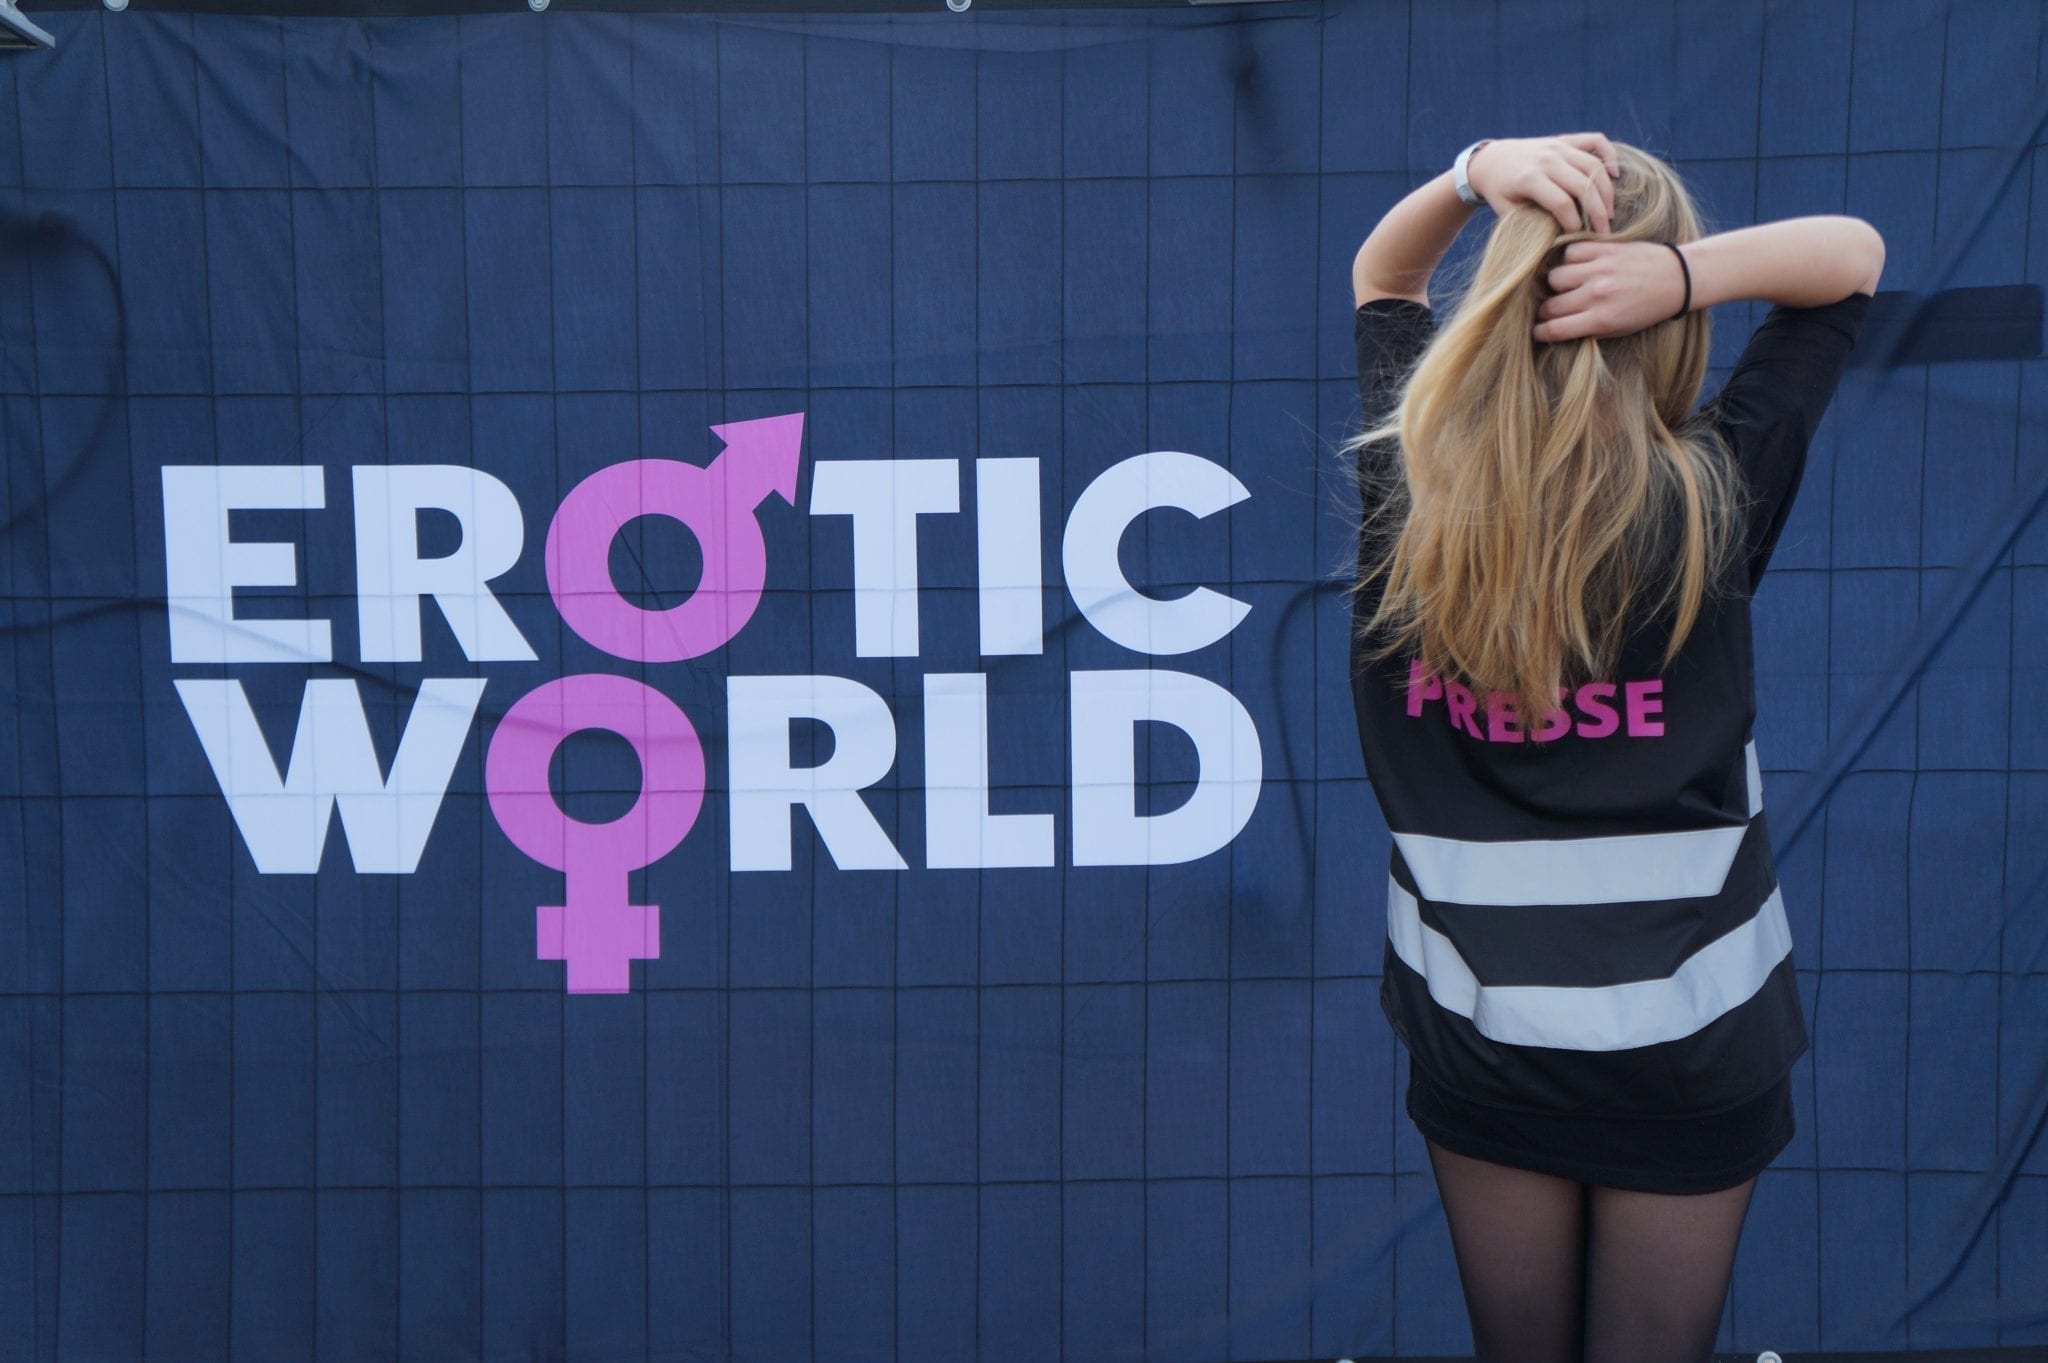 Erotic-world-missgrey-på-sexmesse